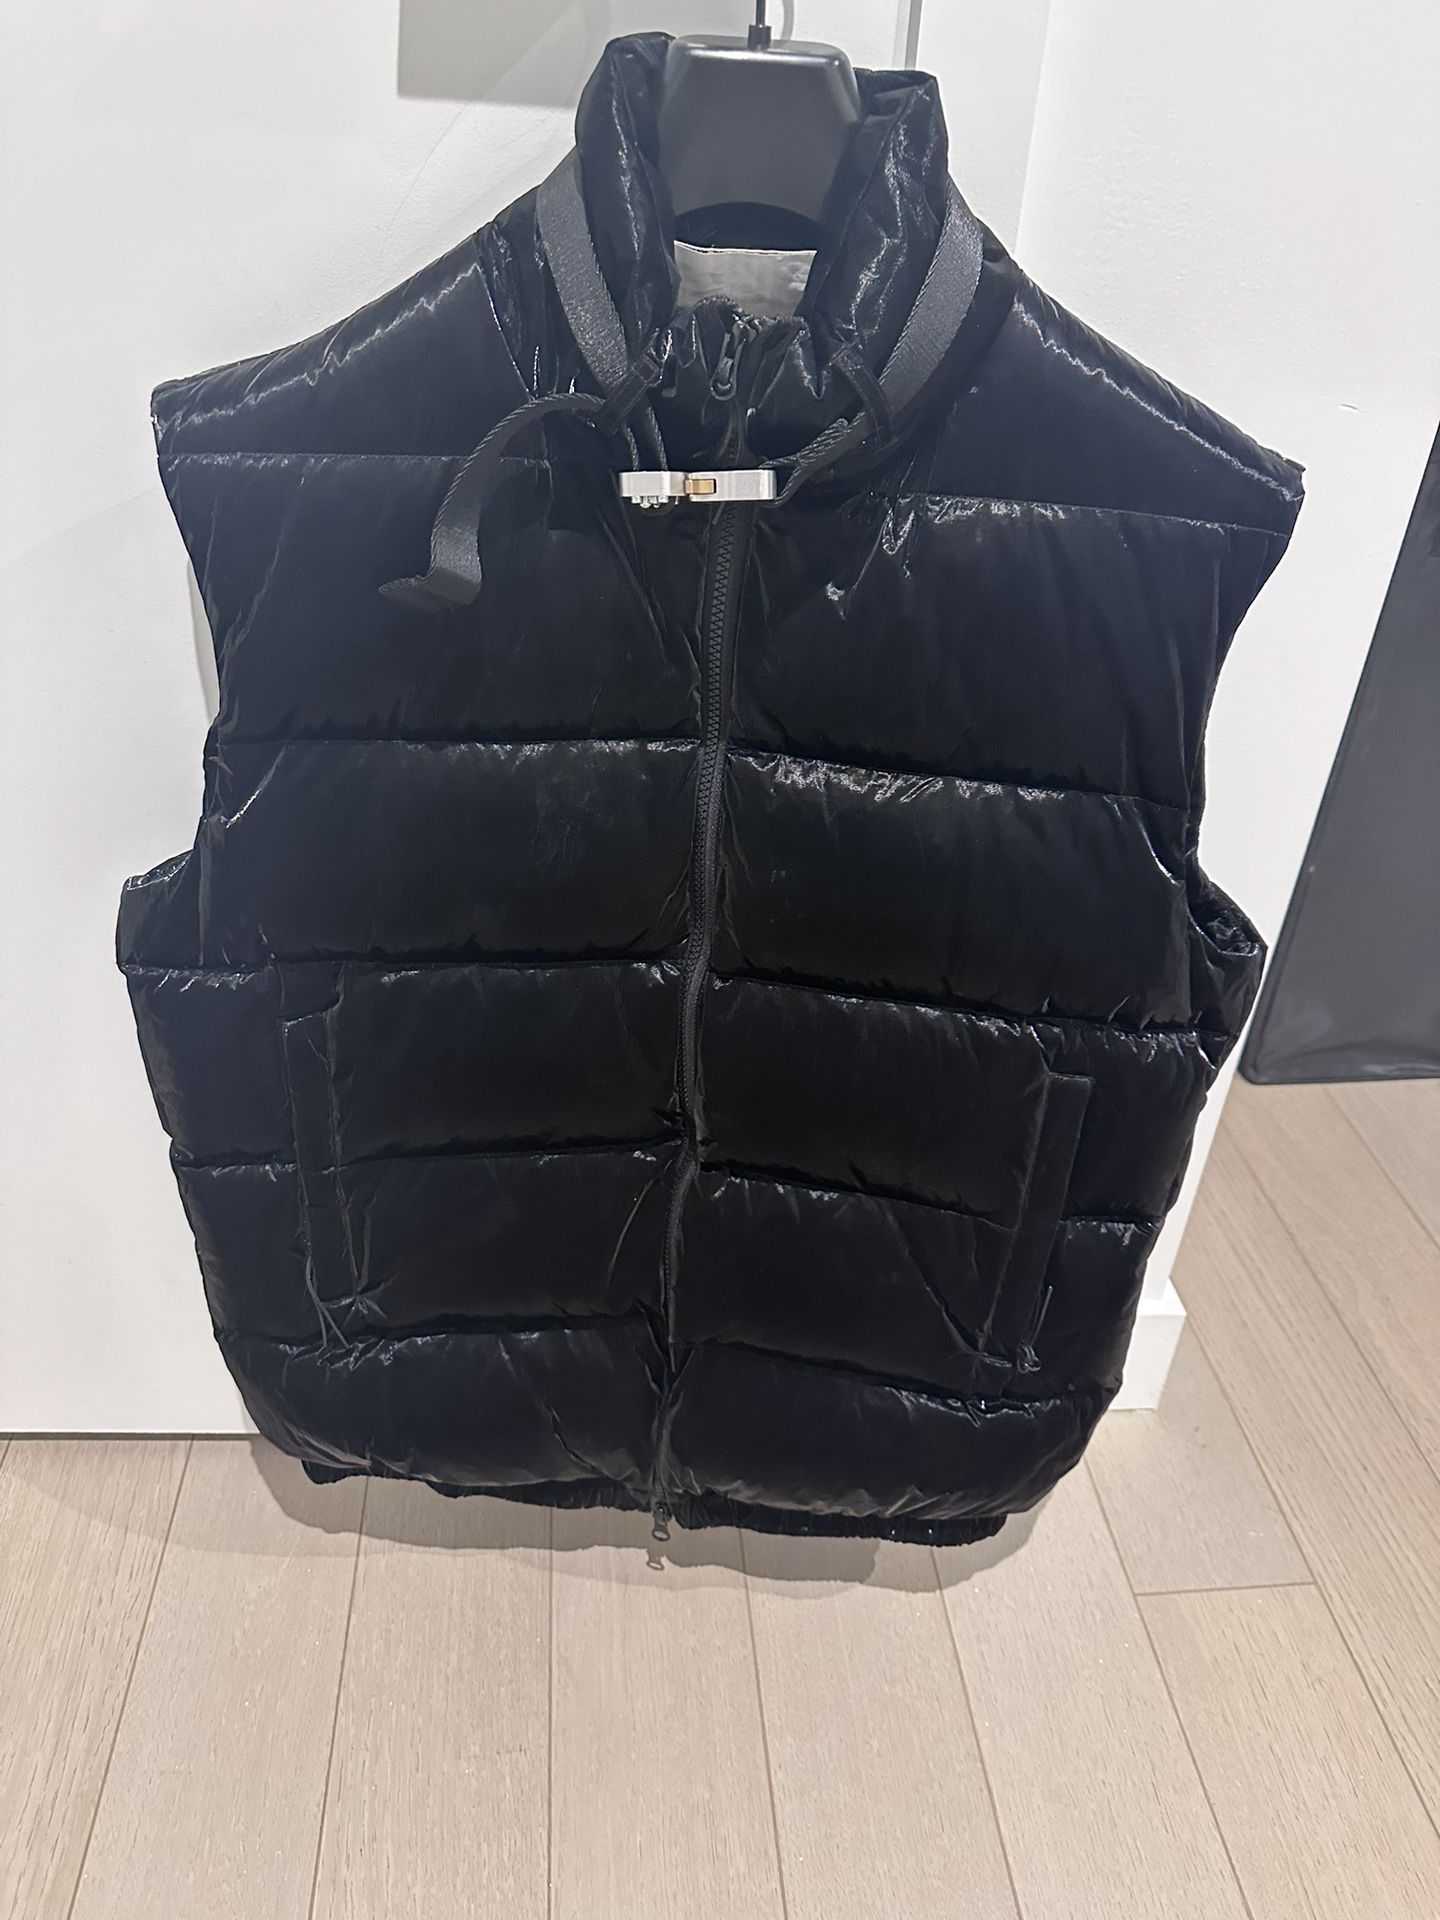 Alyx Vest Size Medium Used For Sale